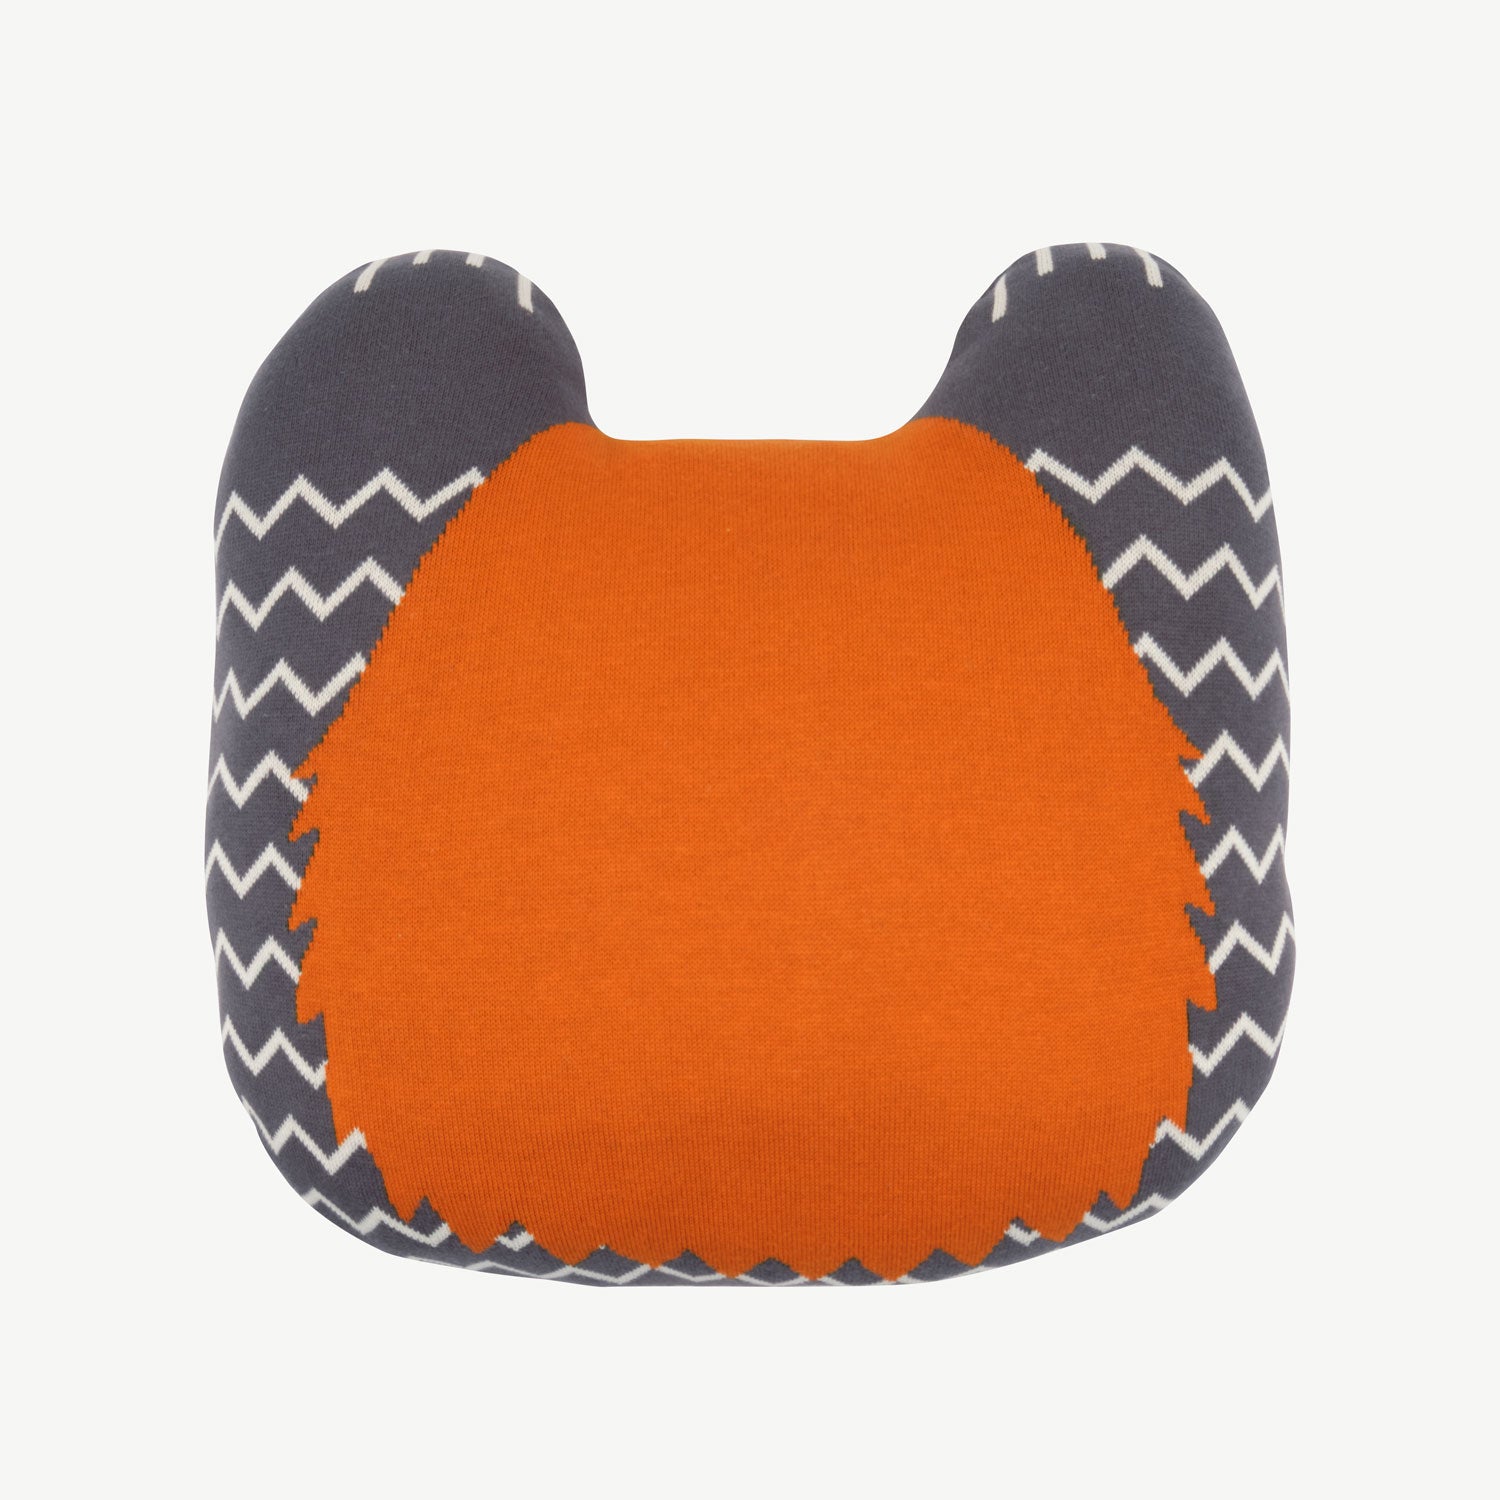 'grr panda' multi charcoal gray knit cushion